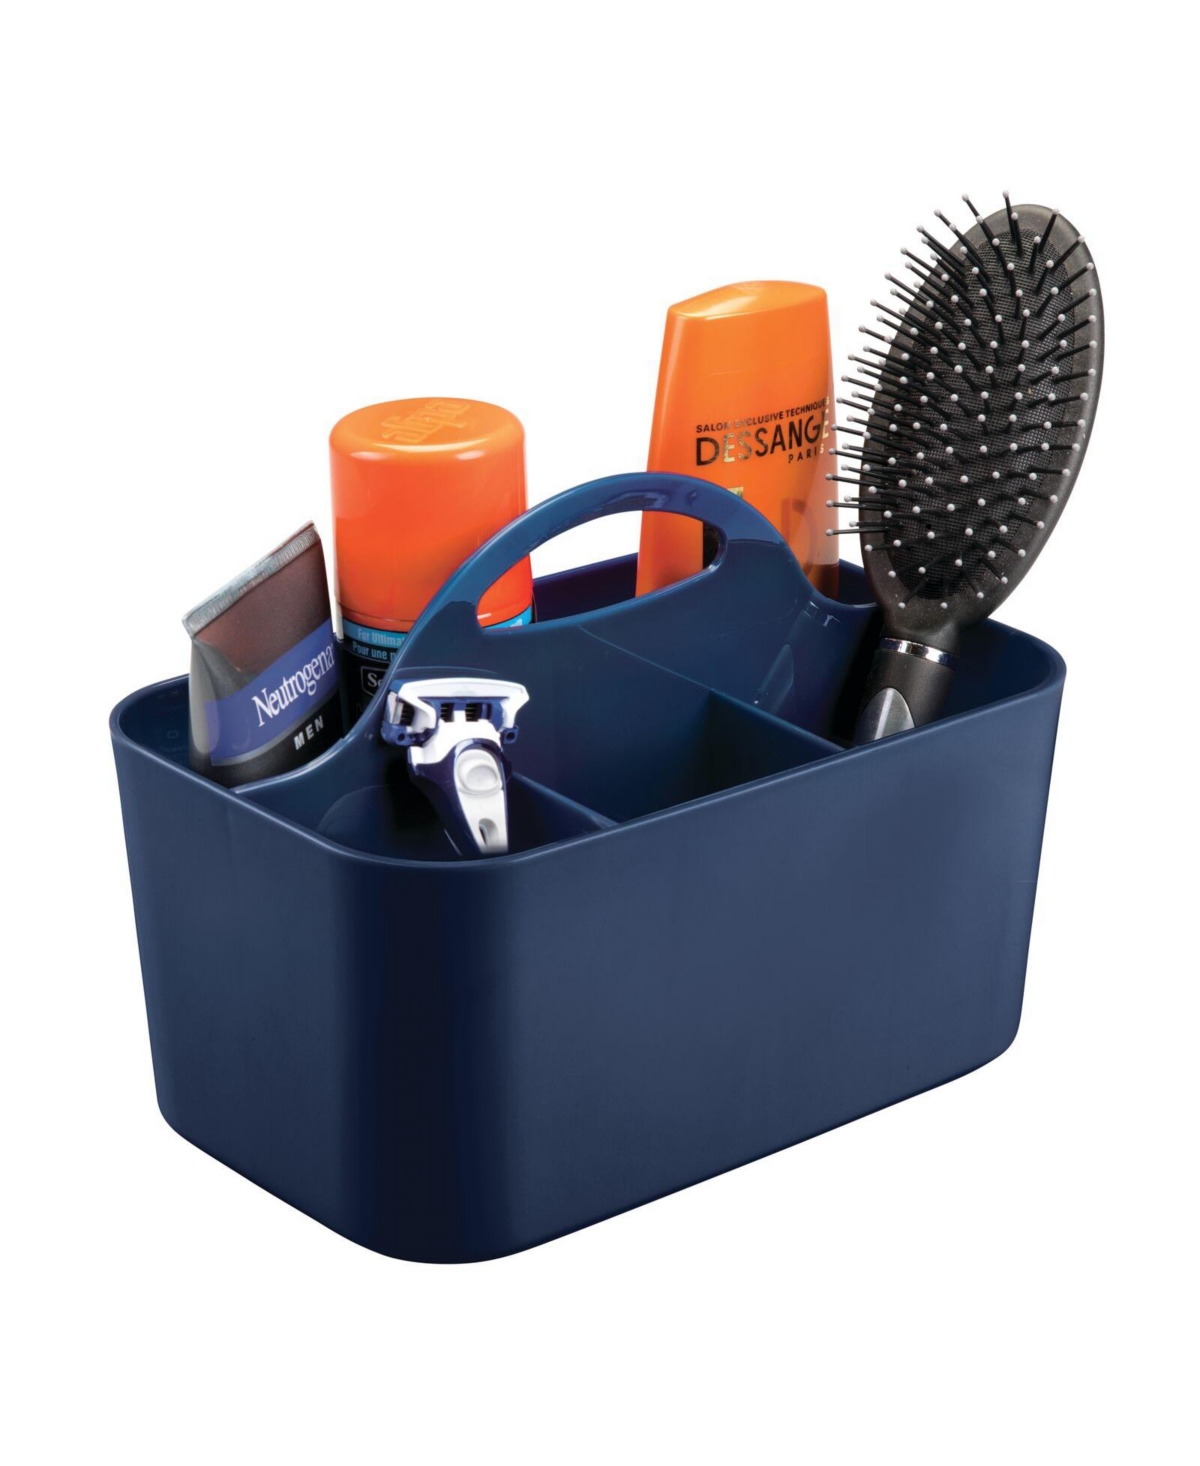 Plastic Shower Caddy Storage Organizer Basket with Handle - Navy